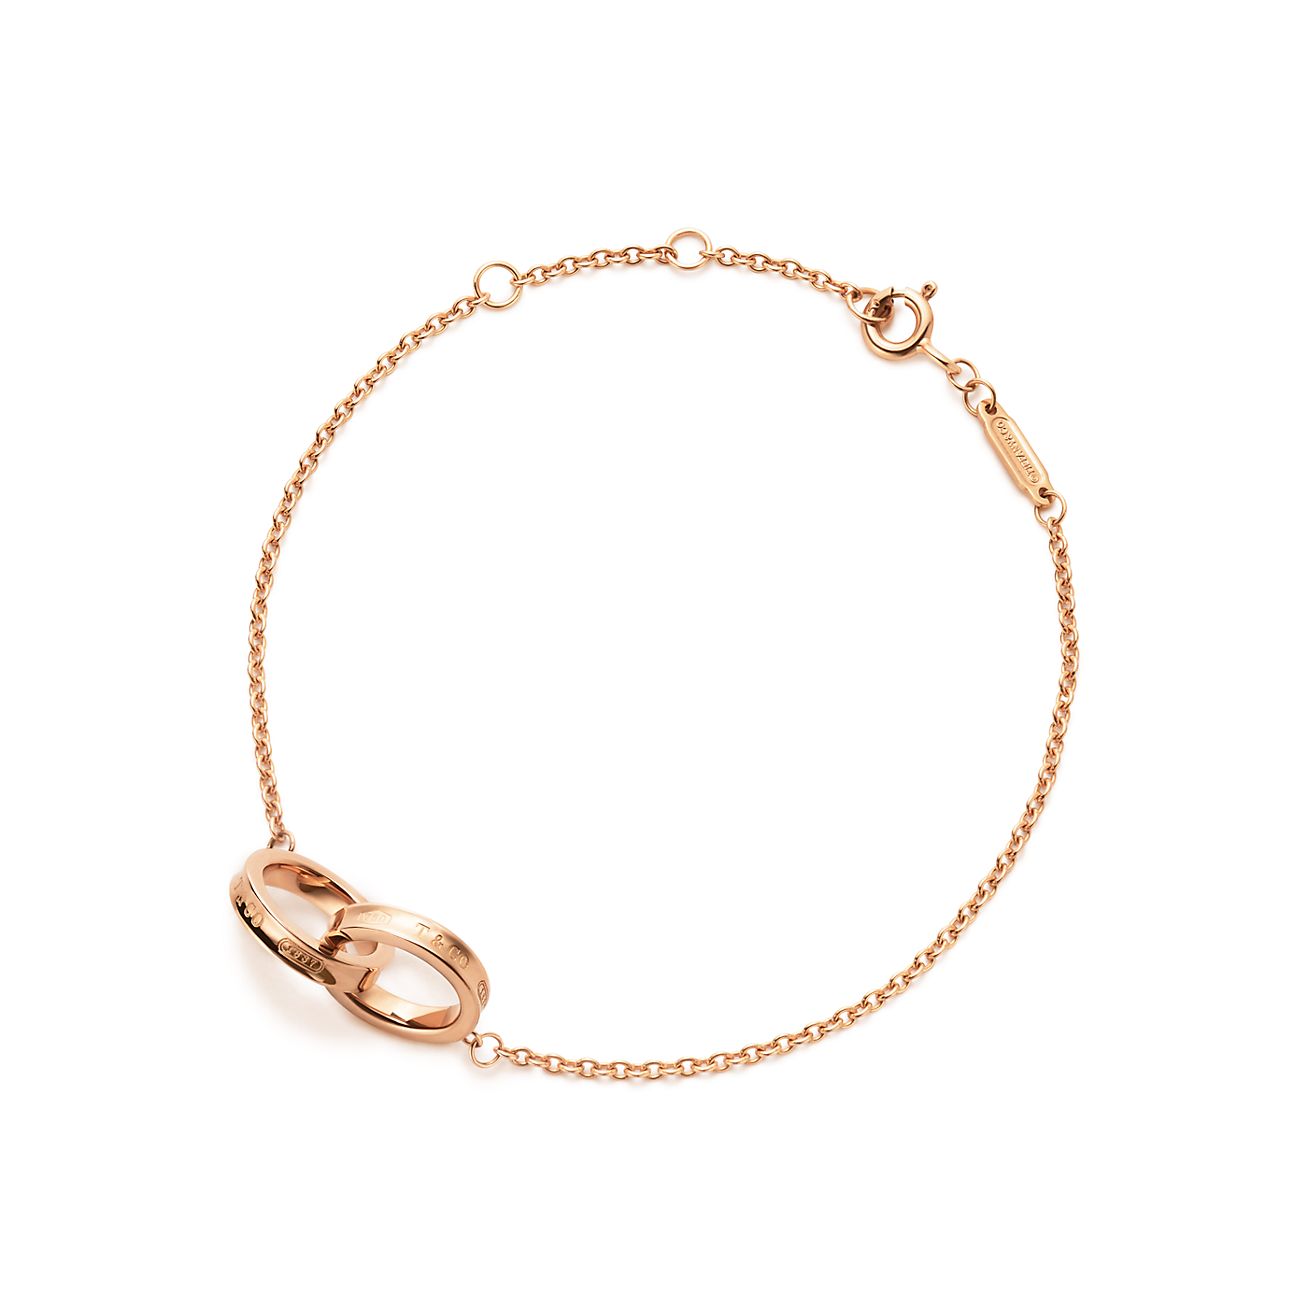 Tiffany 1837® interlocking bracelet in 